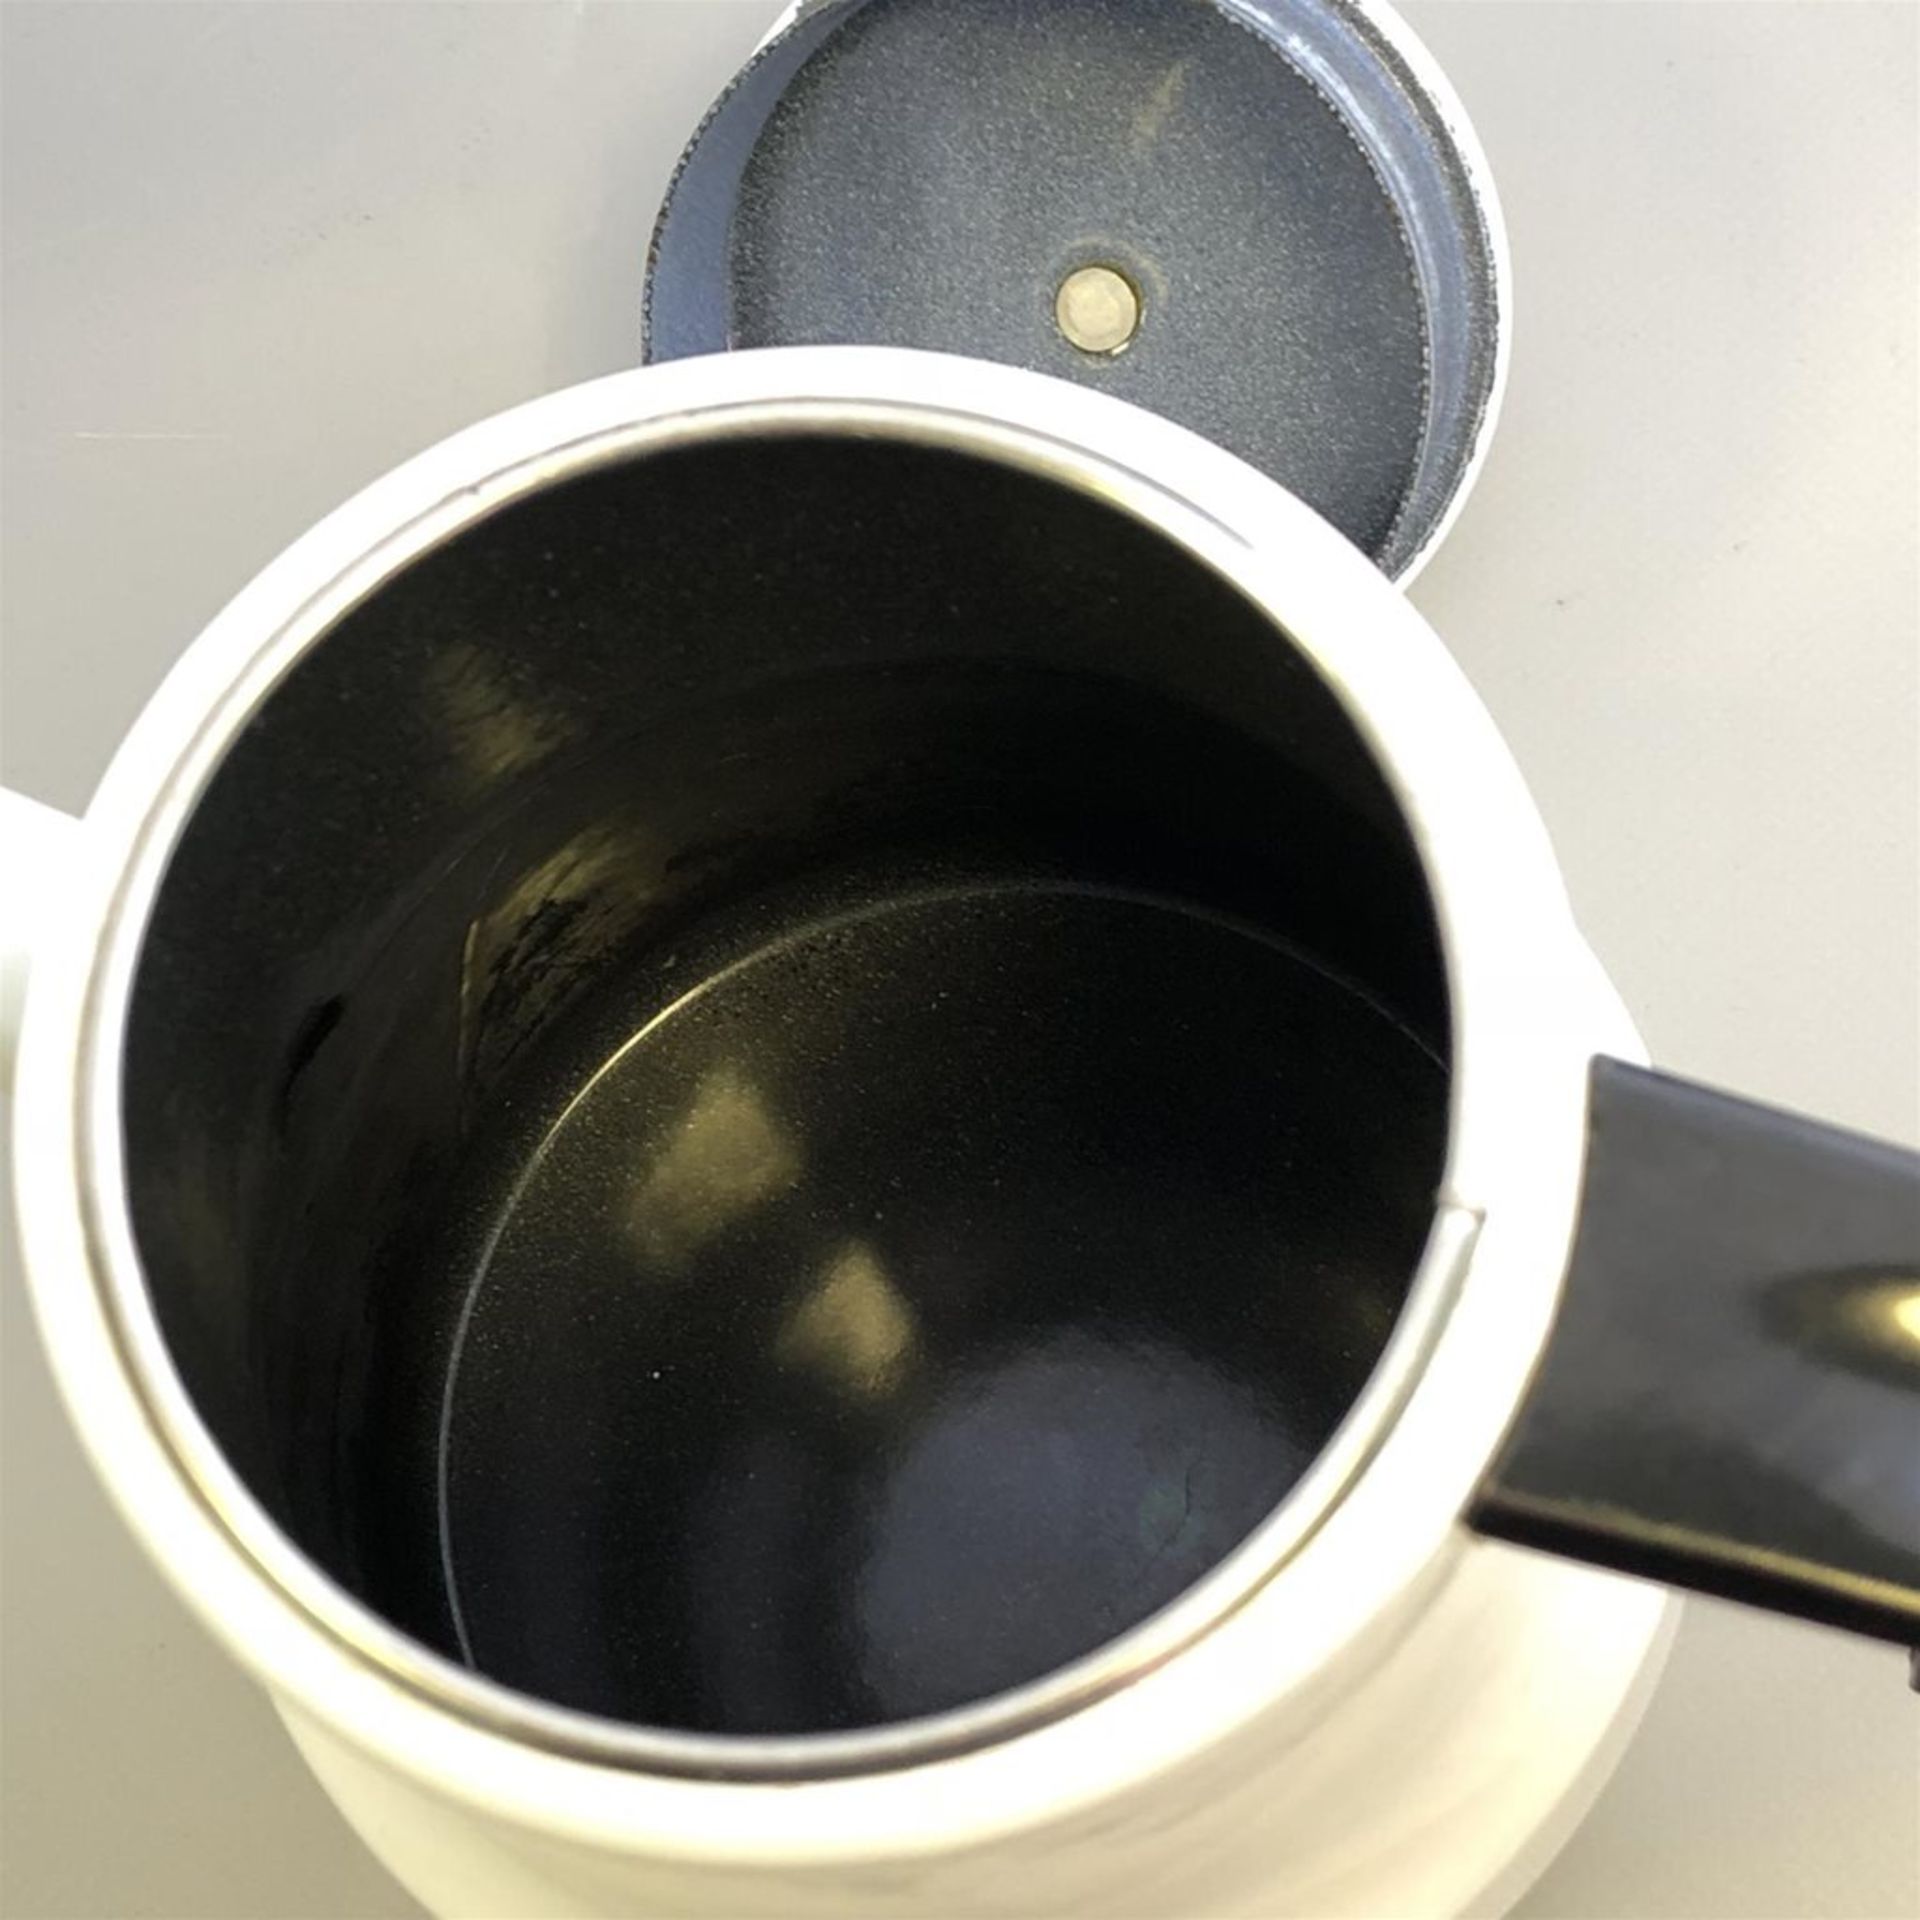 Scandinavian Design Enamel Coffee Pot - Unmarked - Image 2 of 4